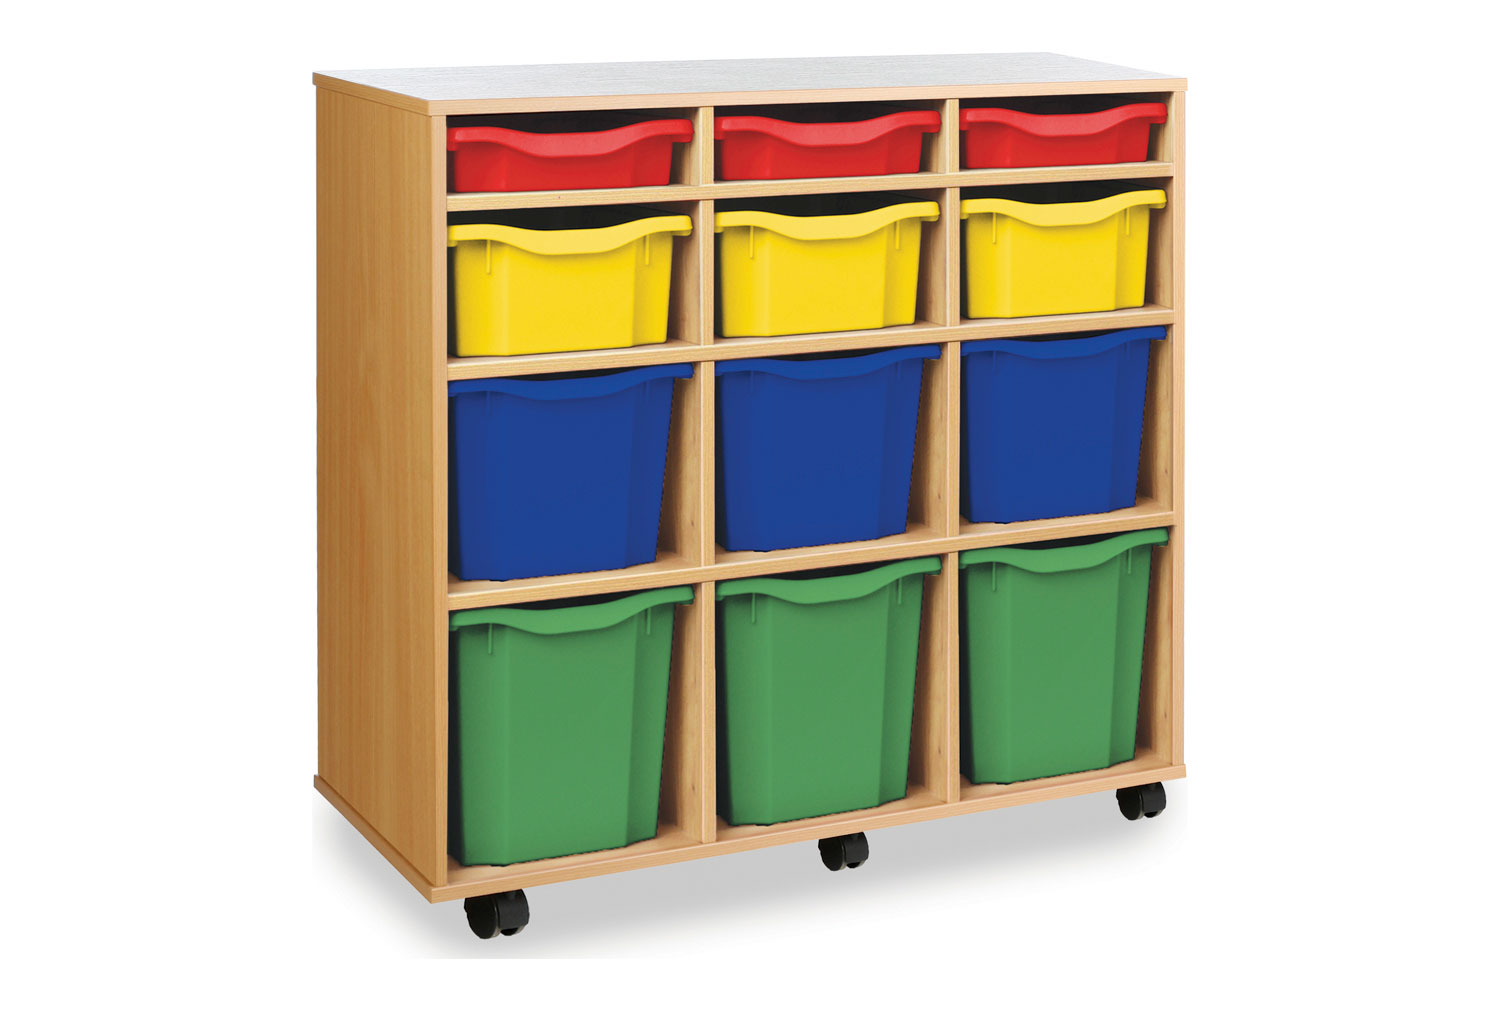 Variety Classroom Tray Storage Unit With 12 Classroom Trays, Red/Blue/Green/Yellow Classroom Trays